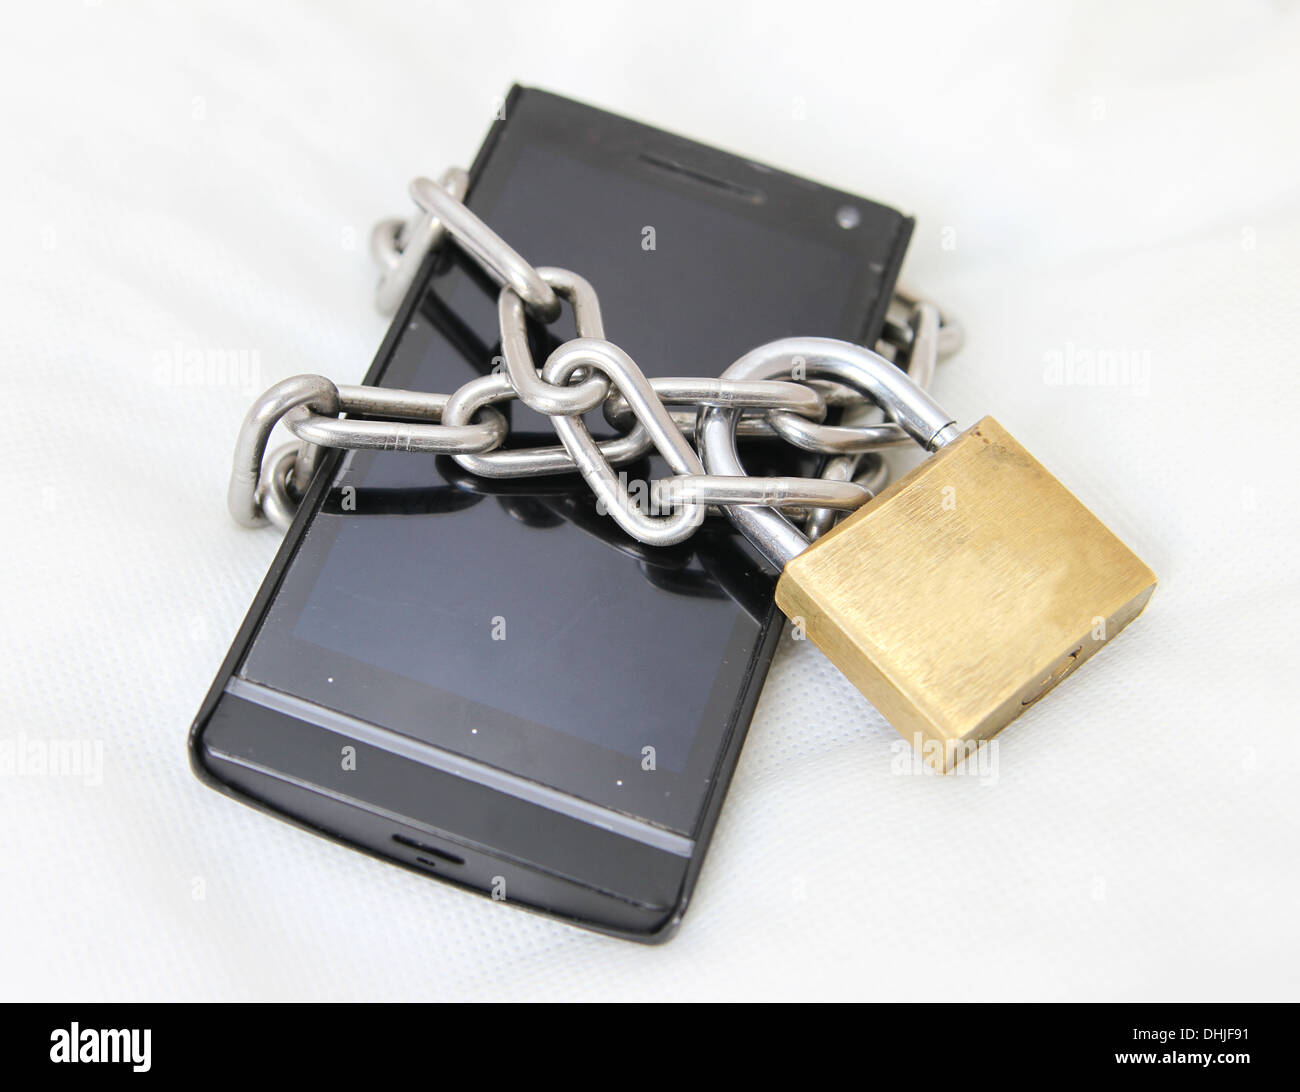 secured data, locked phone Stock Photo